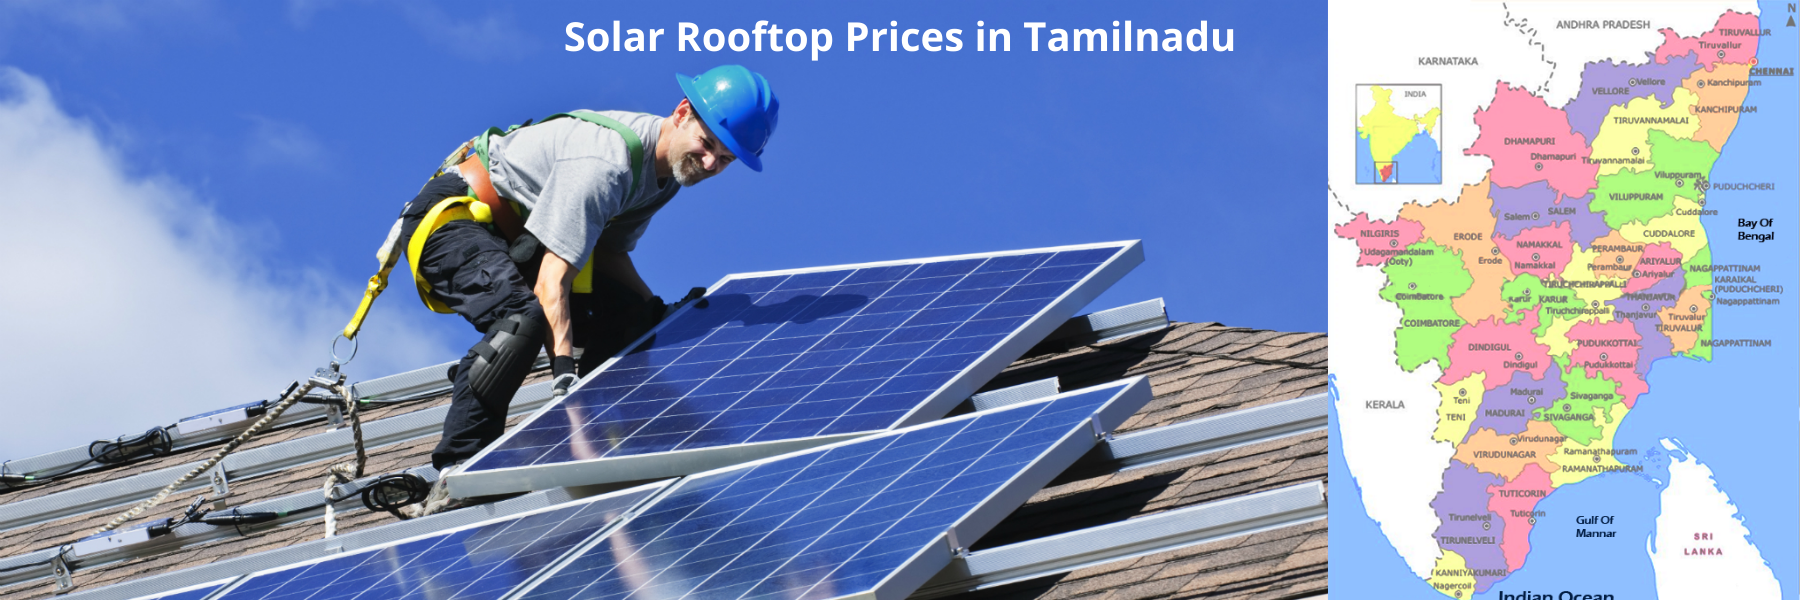 Off-Grid solar rooftop installation prices in Tamil Nadu, 2021-22 Apollo Universe